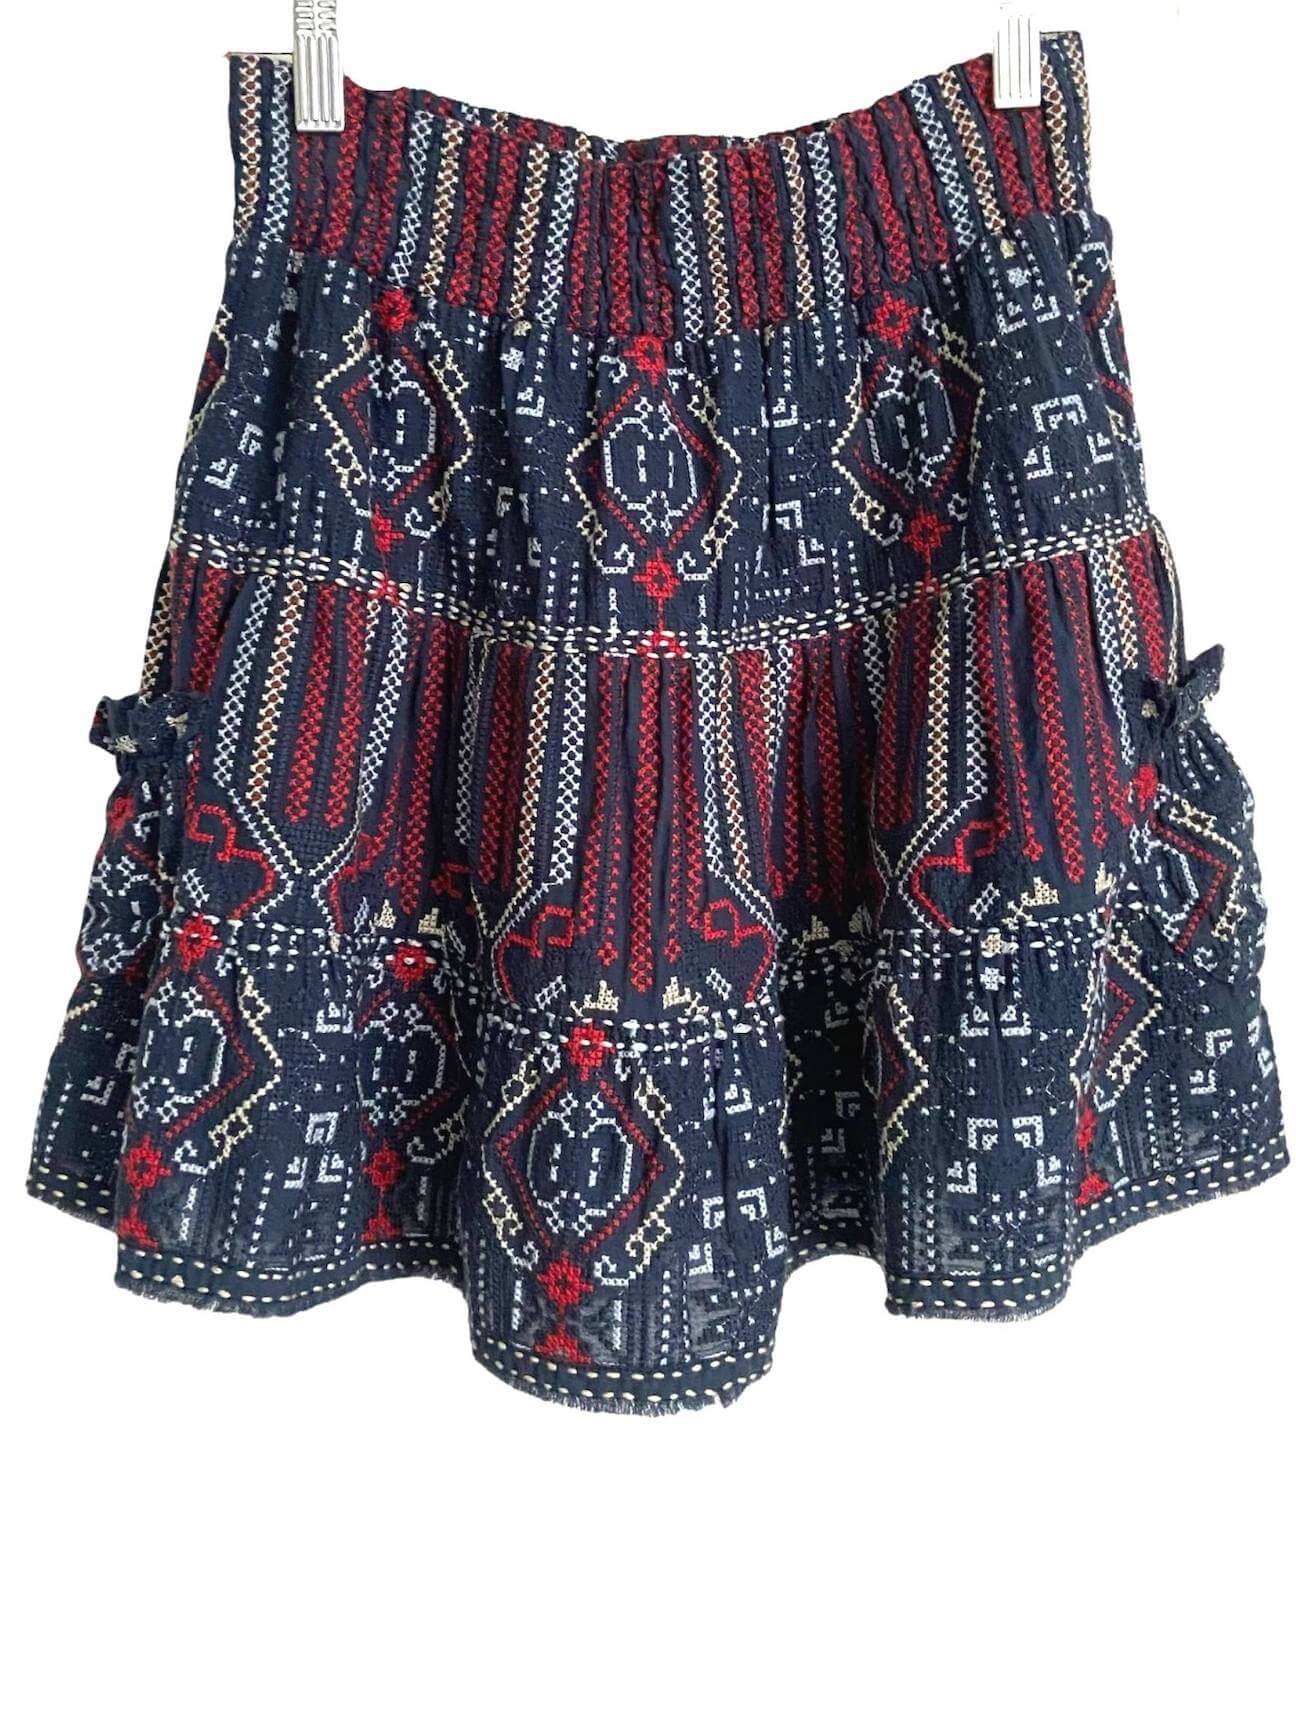 Dark Winter DYLAN blue red embroidered boho skirt